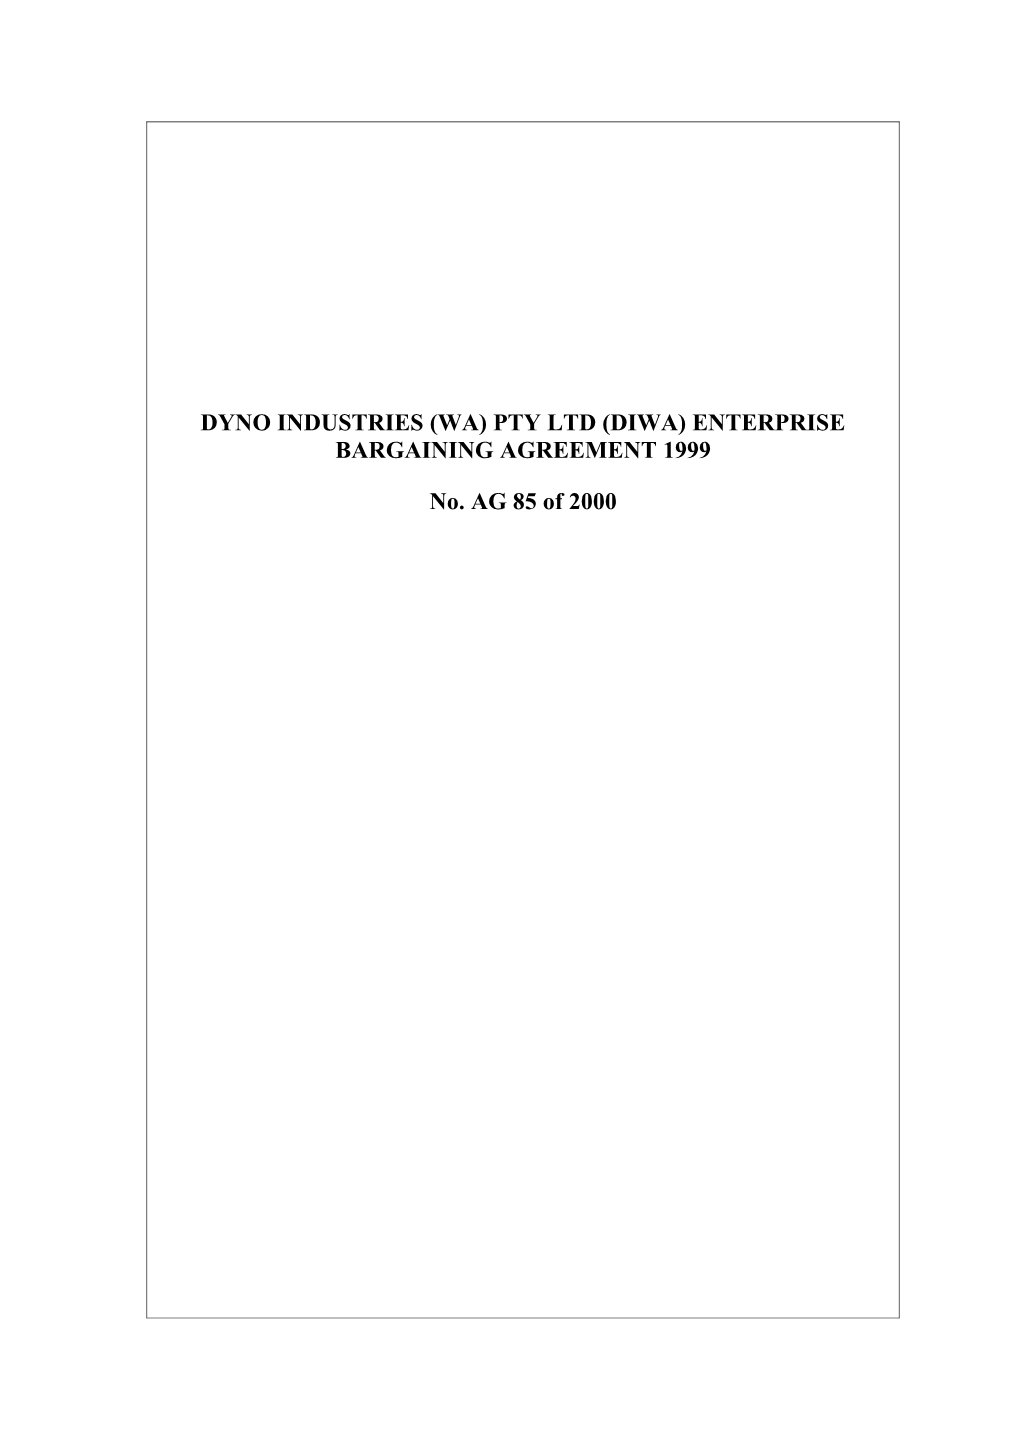 Dyno Industries (WA) Pty Ltd (DIWA) Enterprise Bargaining Agreement 1999